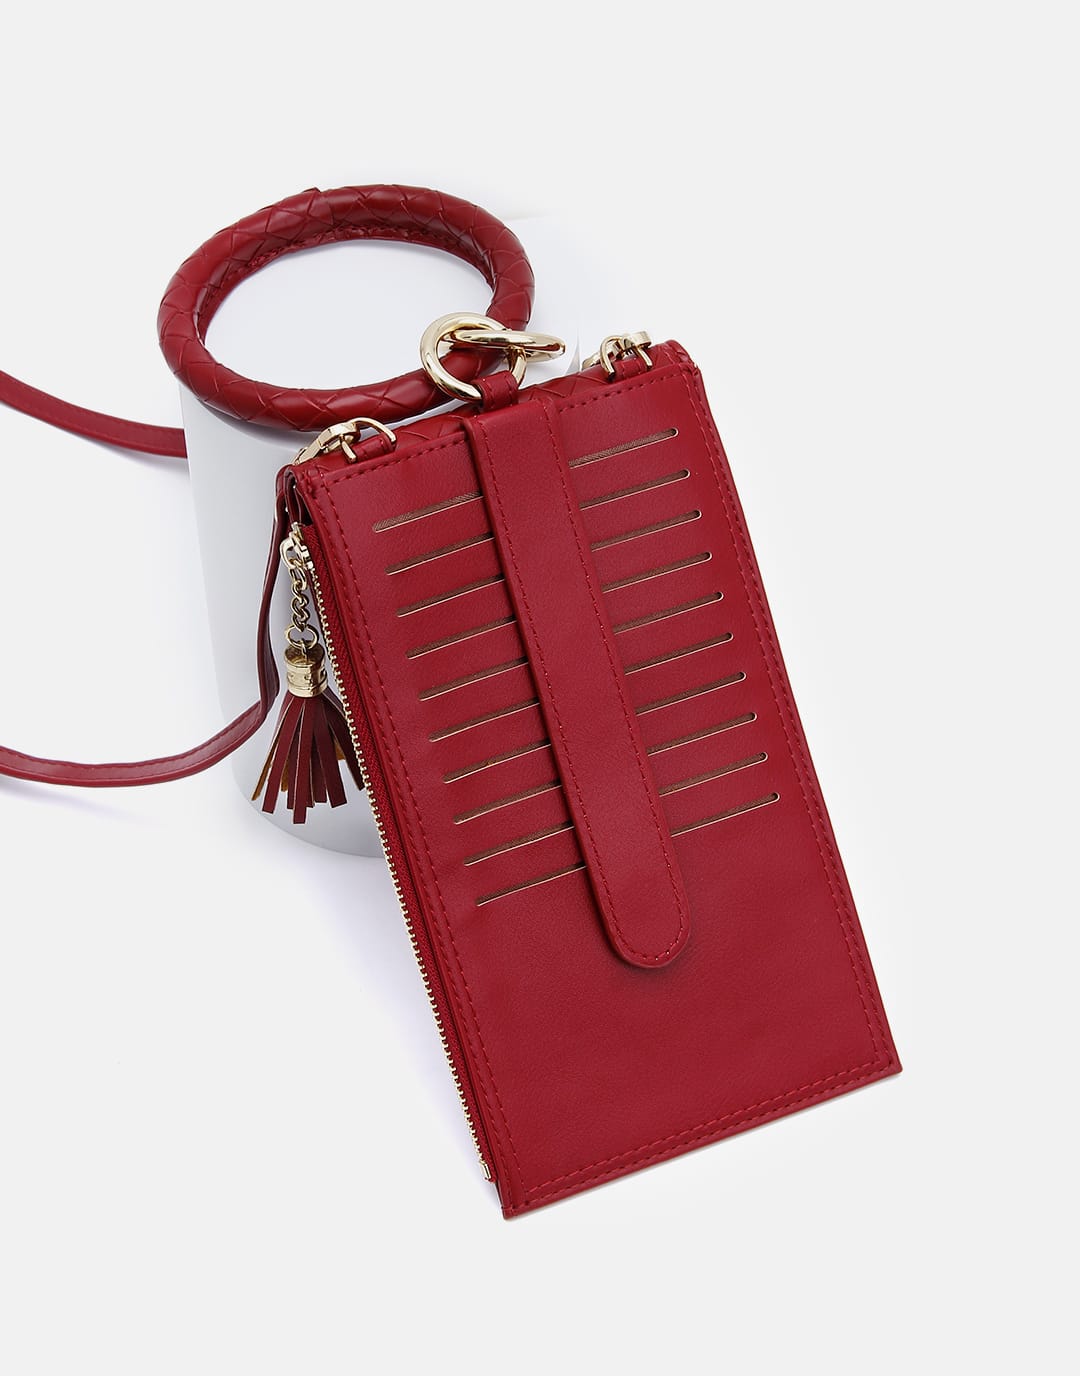 Tassel Women Wrist Bracelet Phone Bag With Credit Card Holder